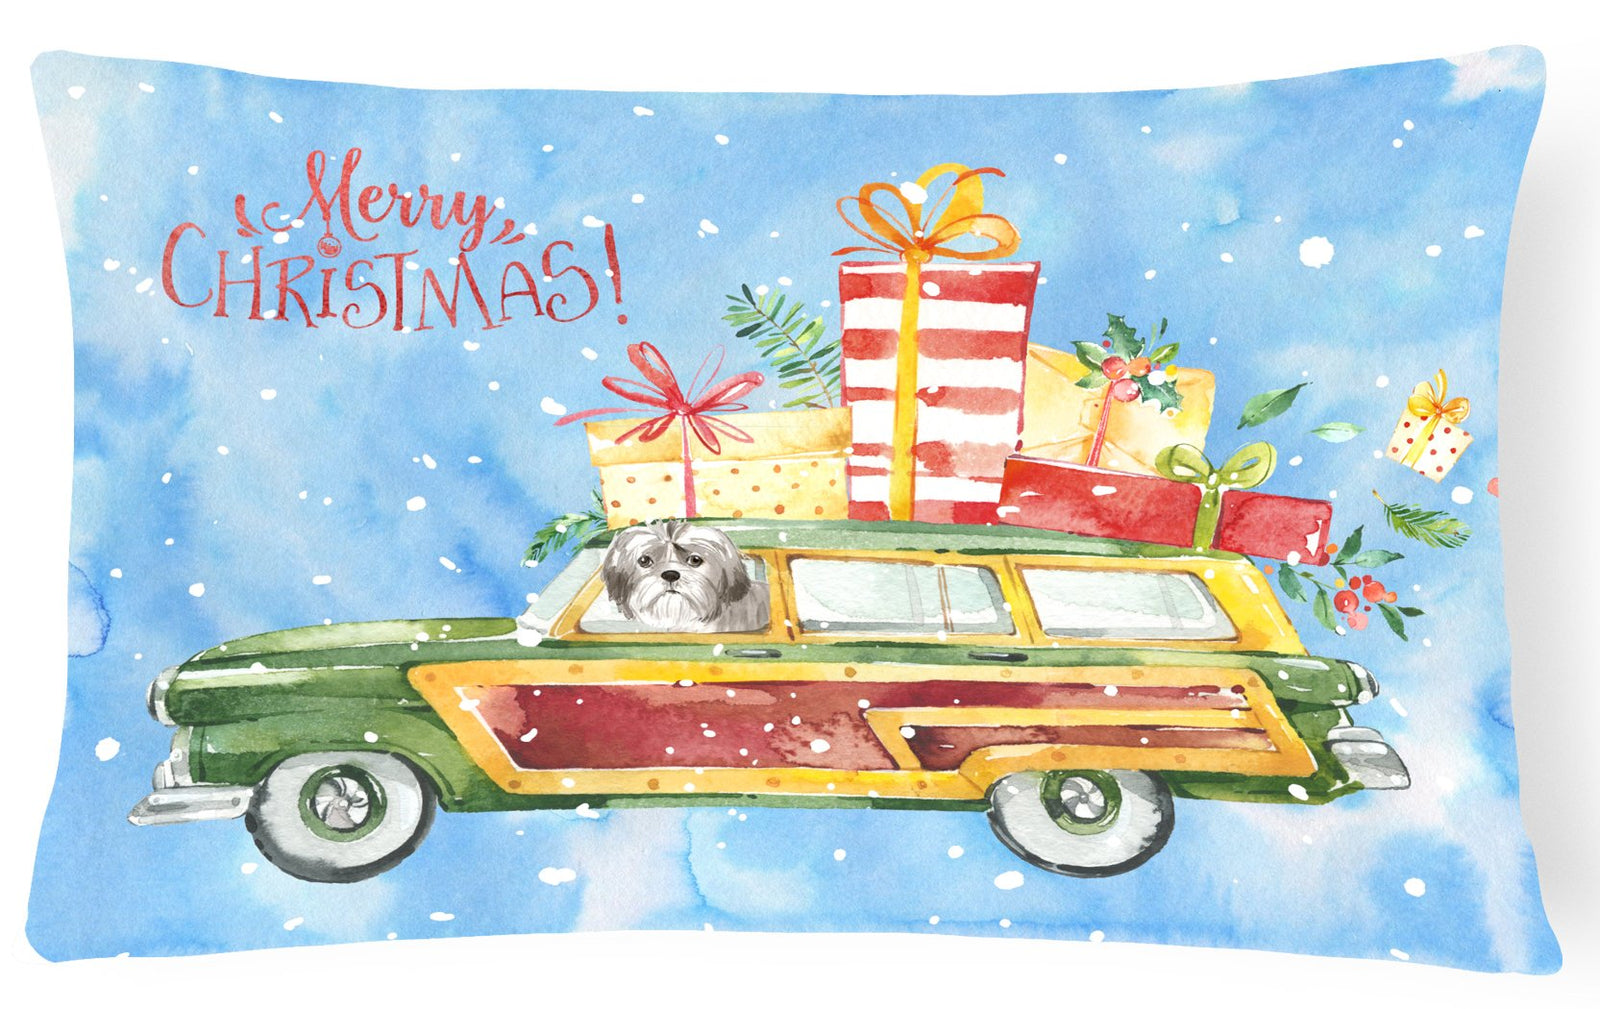 Merry Christmas Shih Tzu Puppy Cut Canvas Fabric Decorative Pillow CK2423PW1216 by Caroline's Treasures